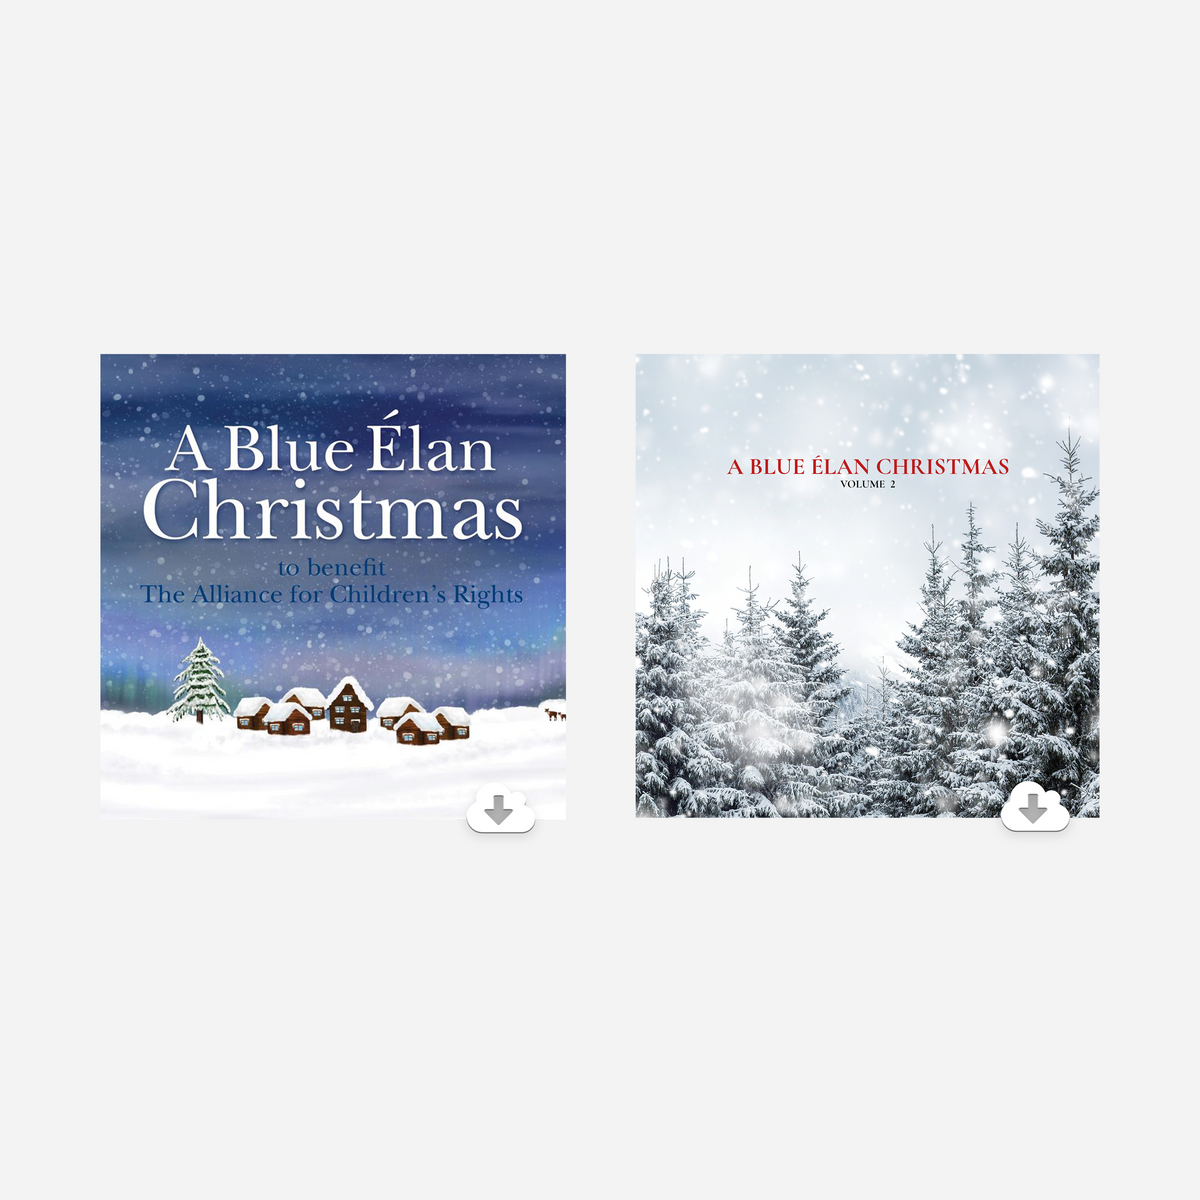 A Blue Élan Christmas - CD Collection